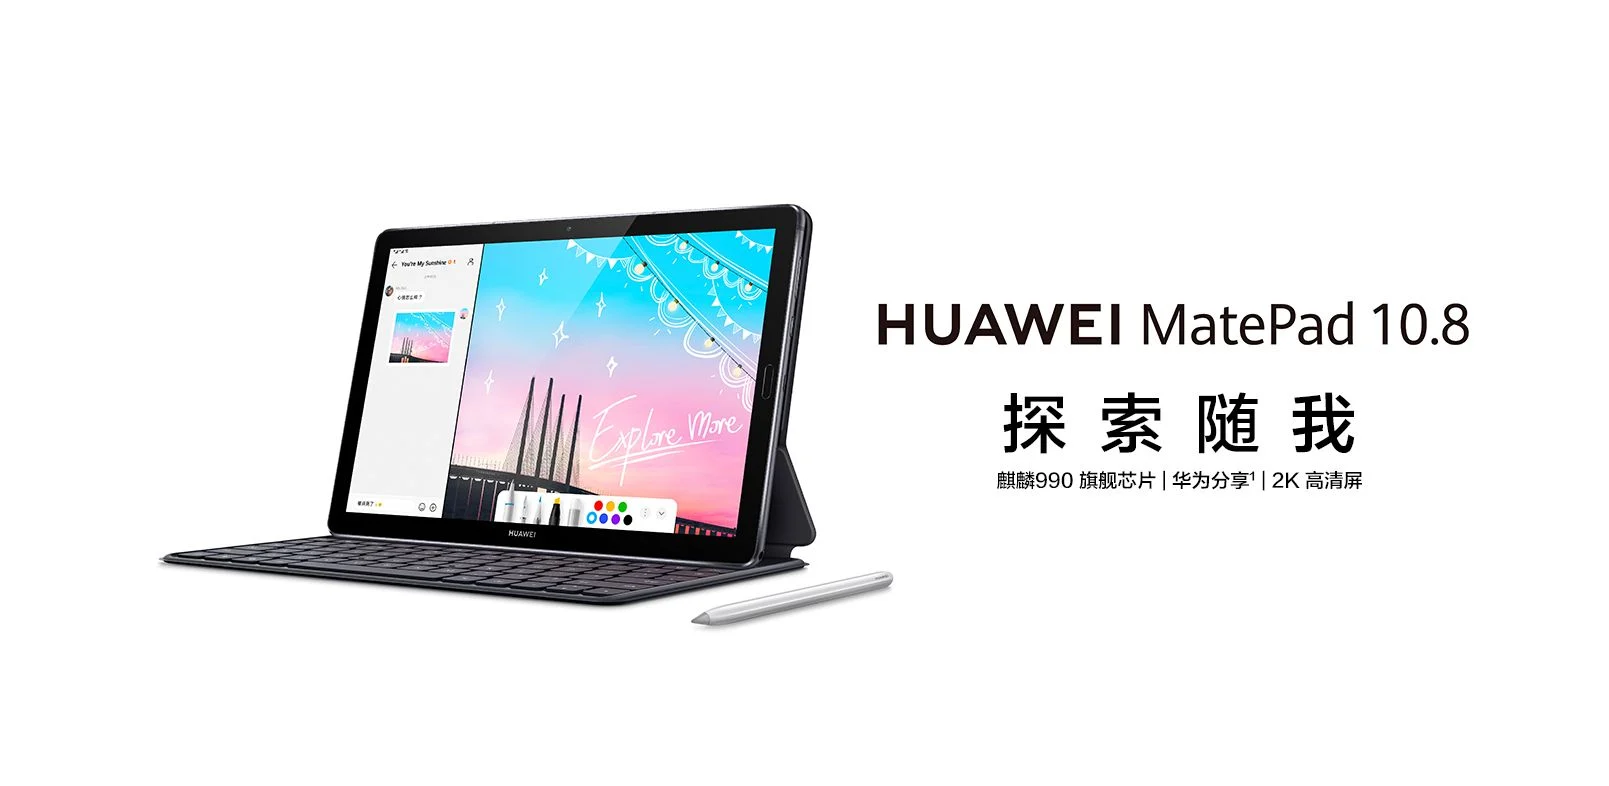 Huawei выпустила планшет MatePad 10.8 за 342 доллара (huawei matepad 10 1)